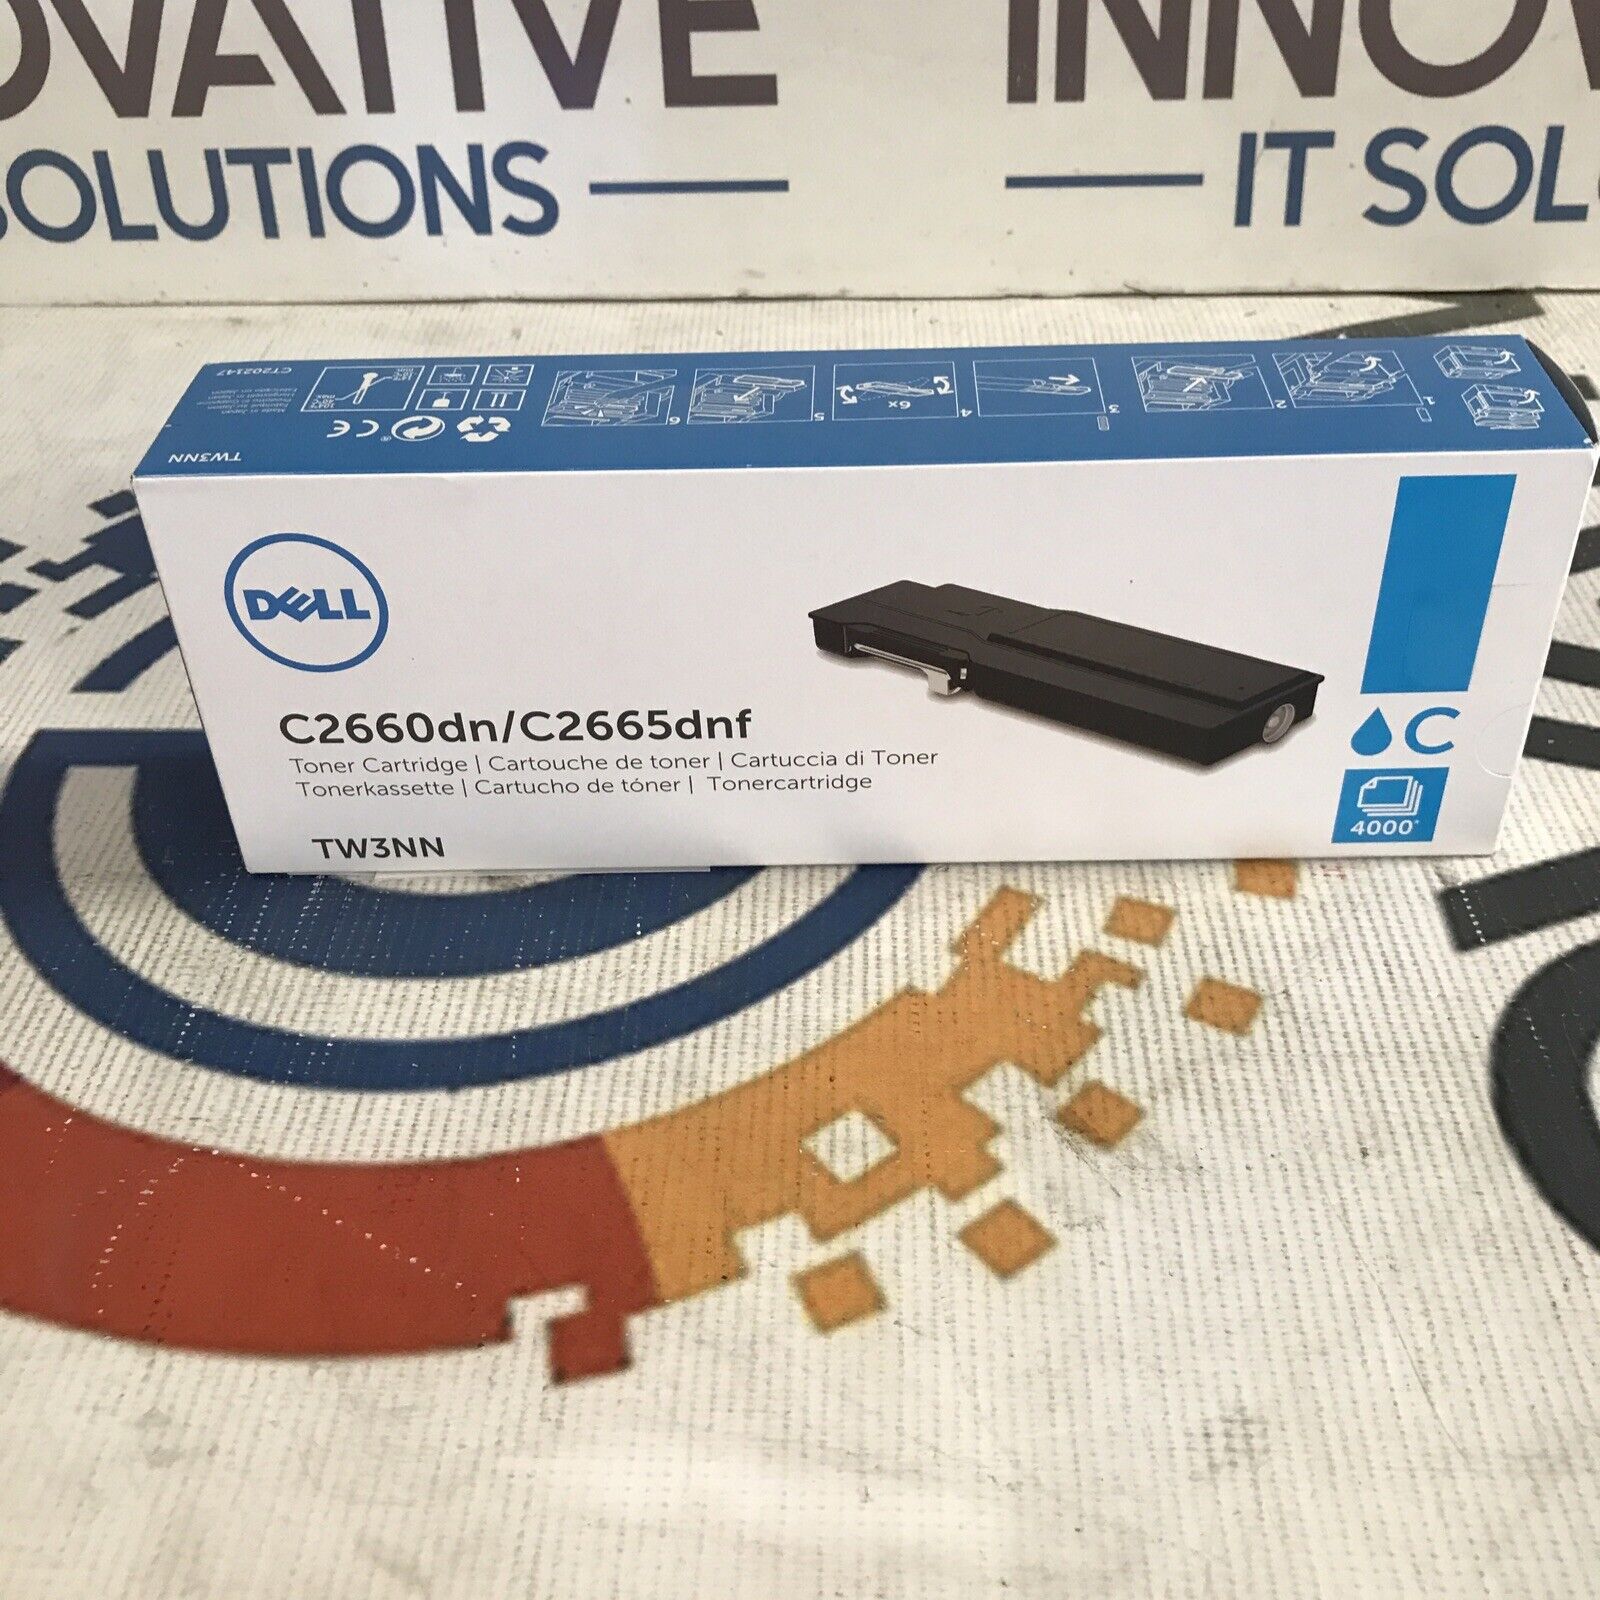 Dell Toner Cartridge C2660dn/C2665dnf TW3NN- New